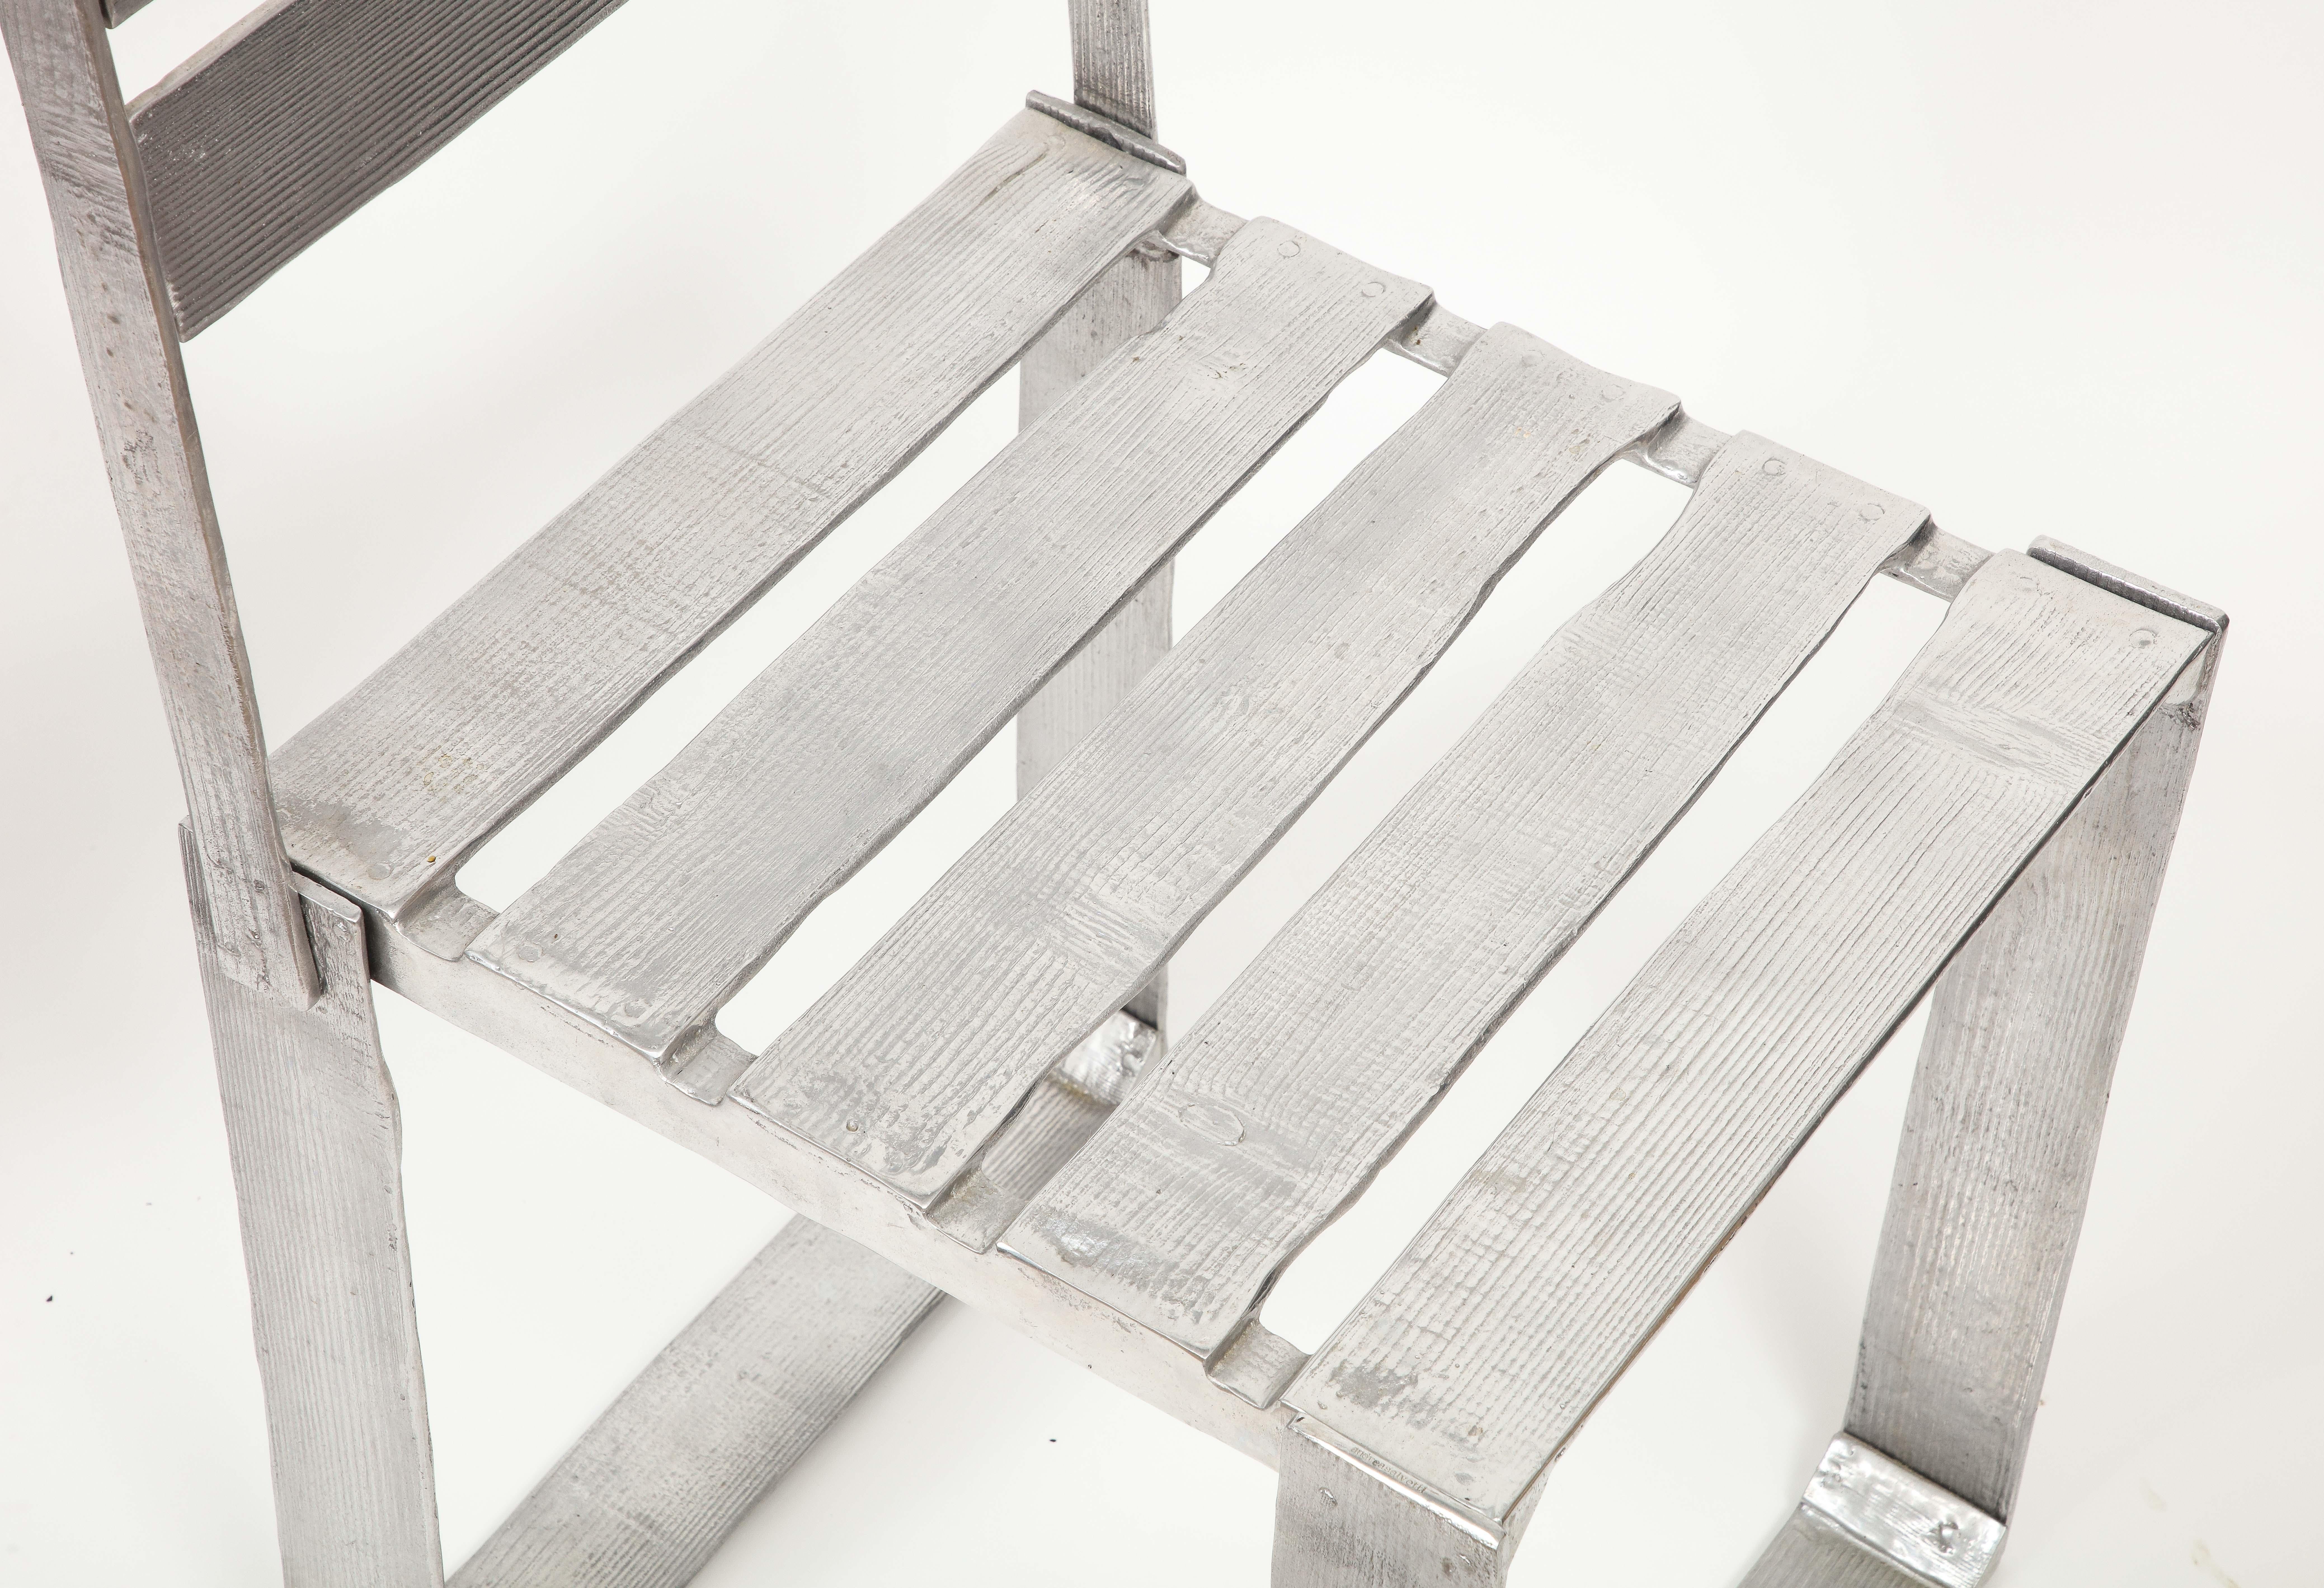 Andrea Salvetti Silver Cast Aluminum Chair and Table Set, 